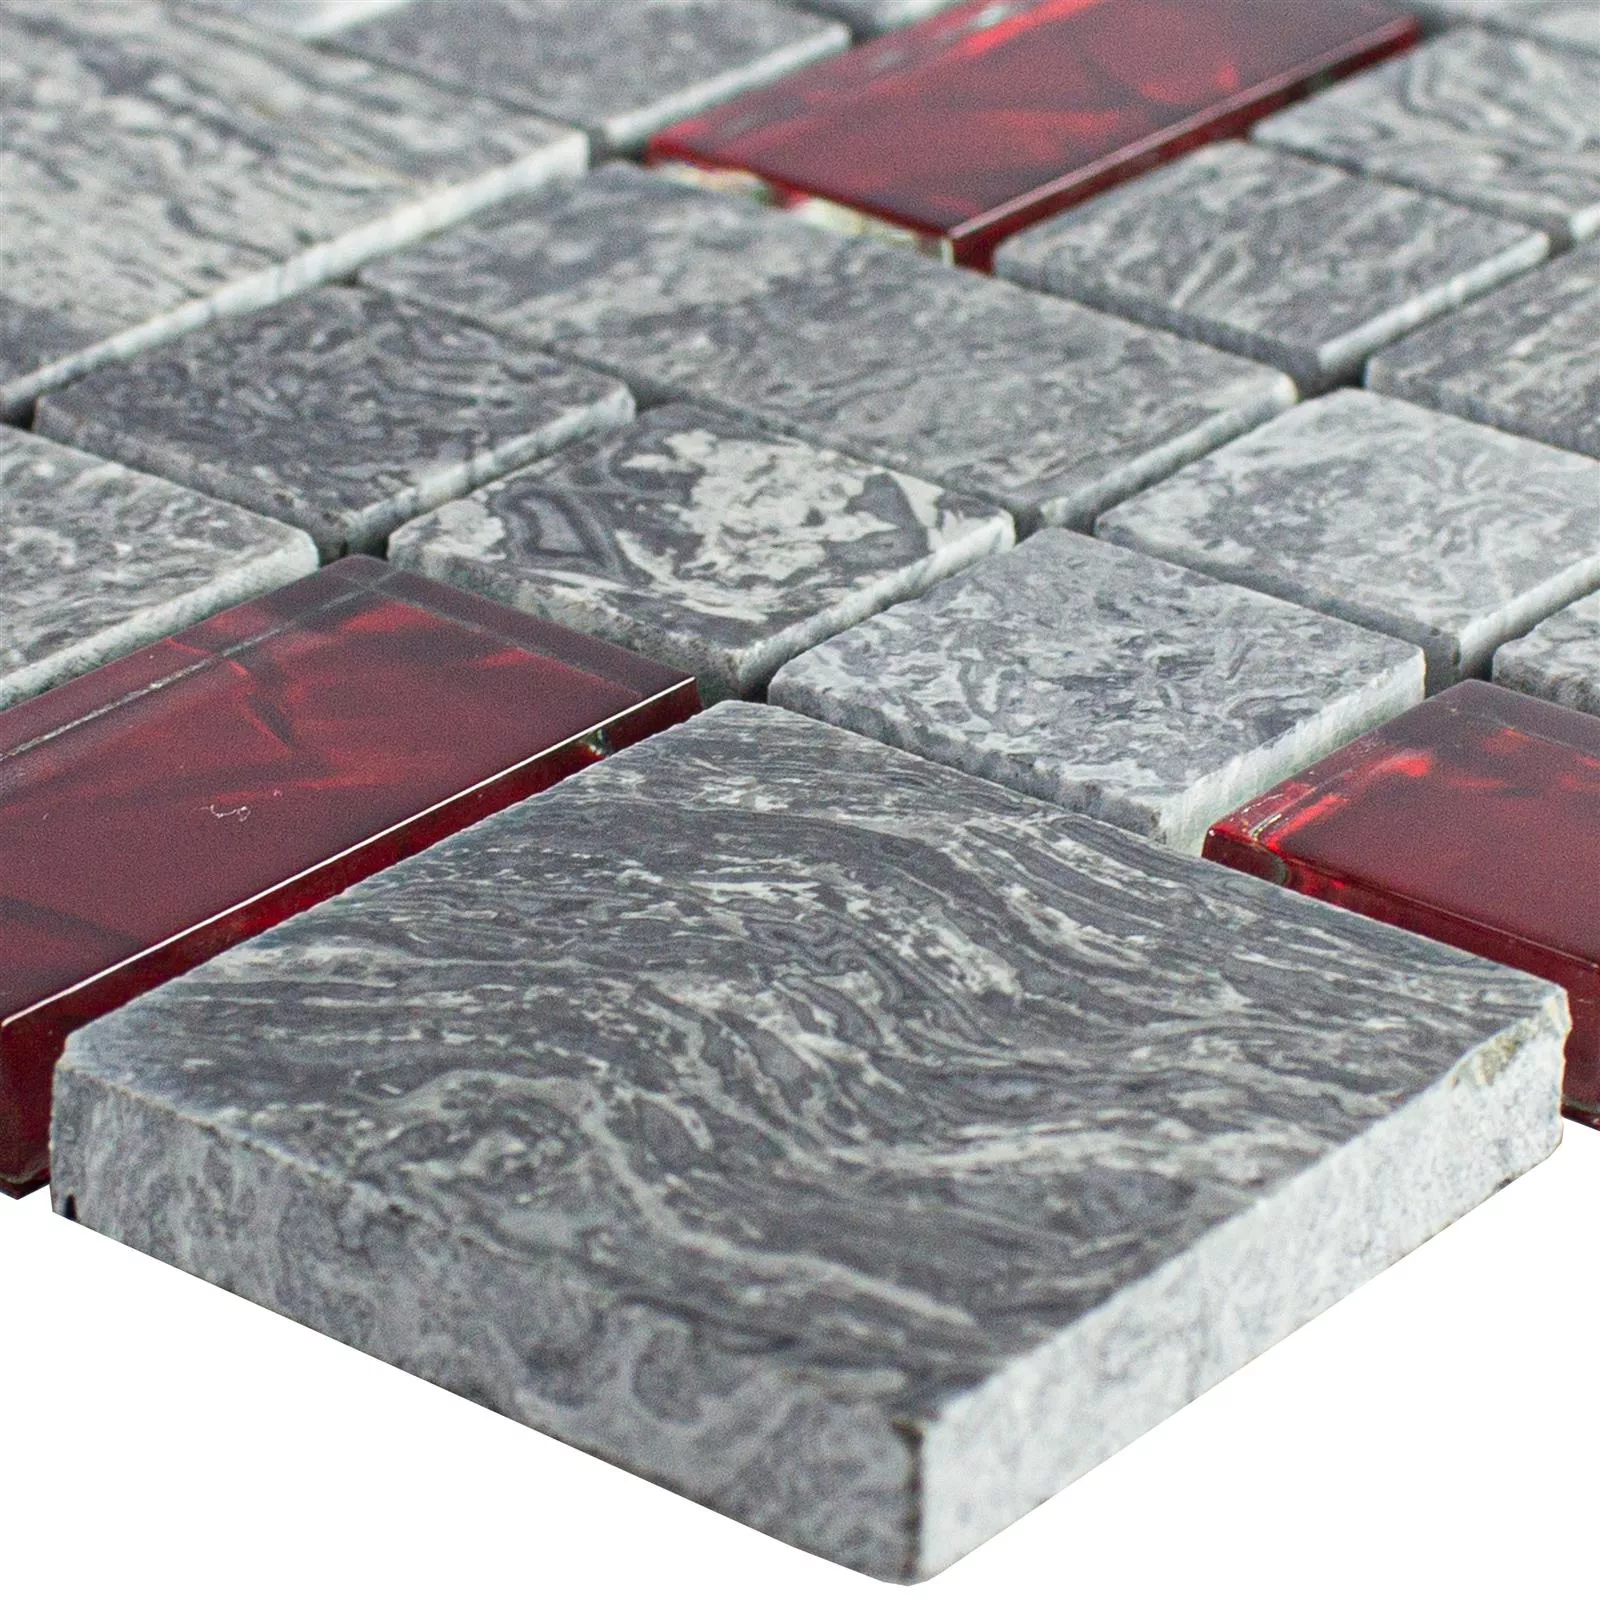 Glass Mosaic Natural Stone Tiles Manavgat Grey Red 2 Mix